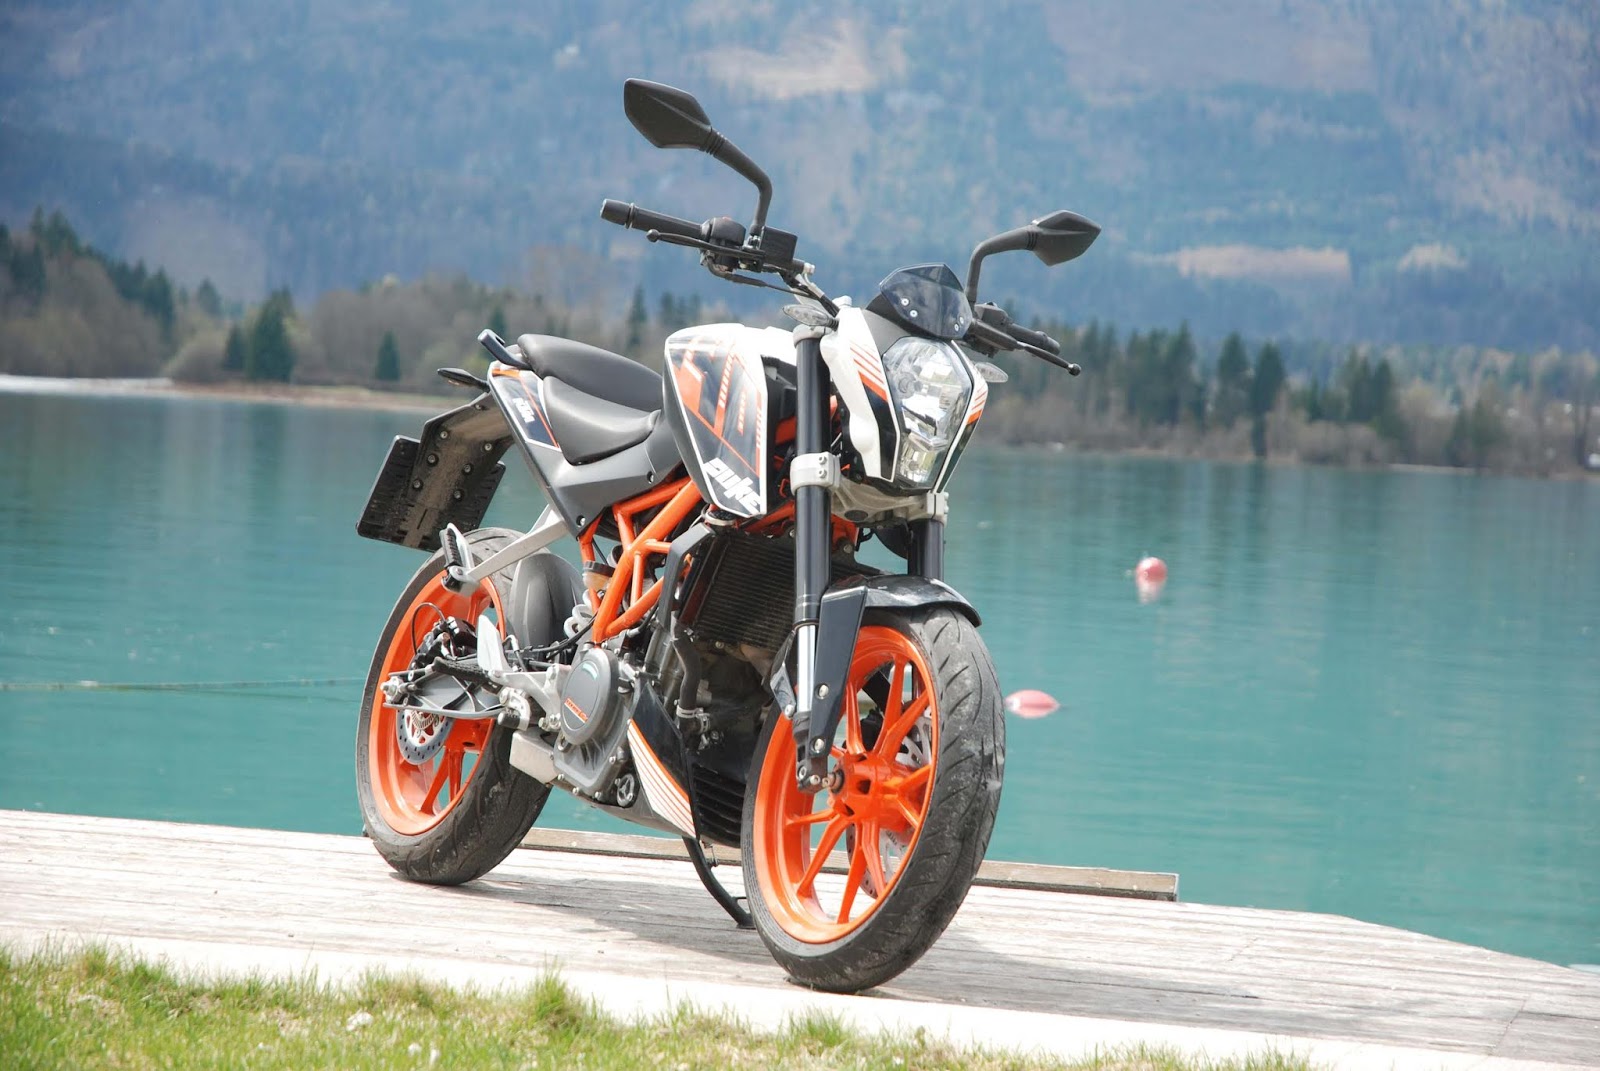 ktm duke 390 wallpaper hd 1080p,motorcycle,vehicle,supermoto,motorcycling,mode of transport